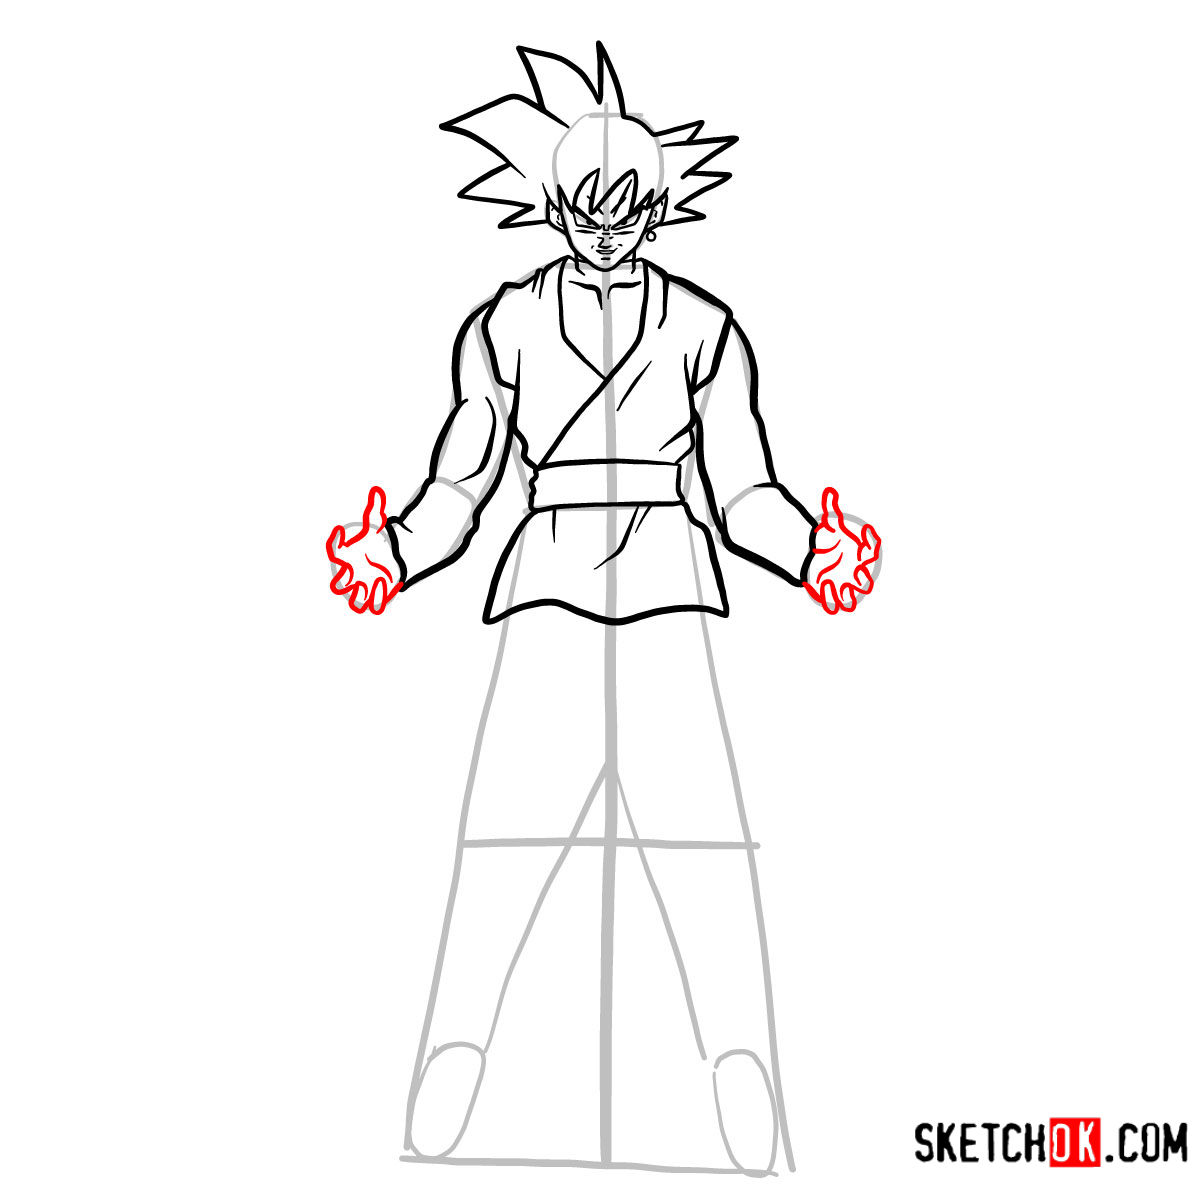 How to Draw Goku Black [ Full Body ] | Dragonball | Pencil sketch - YouTube